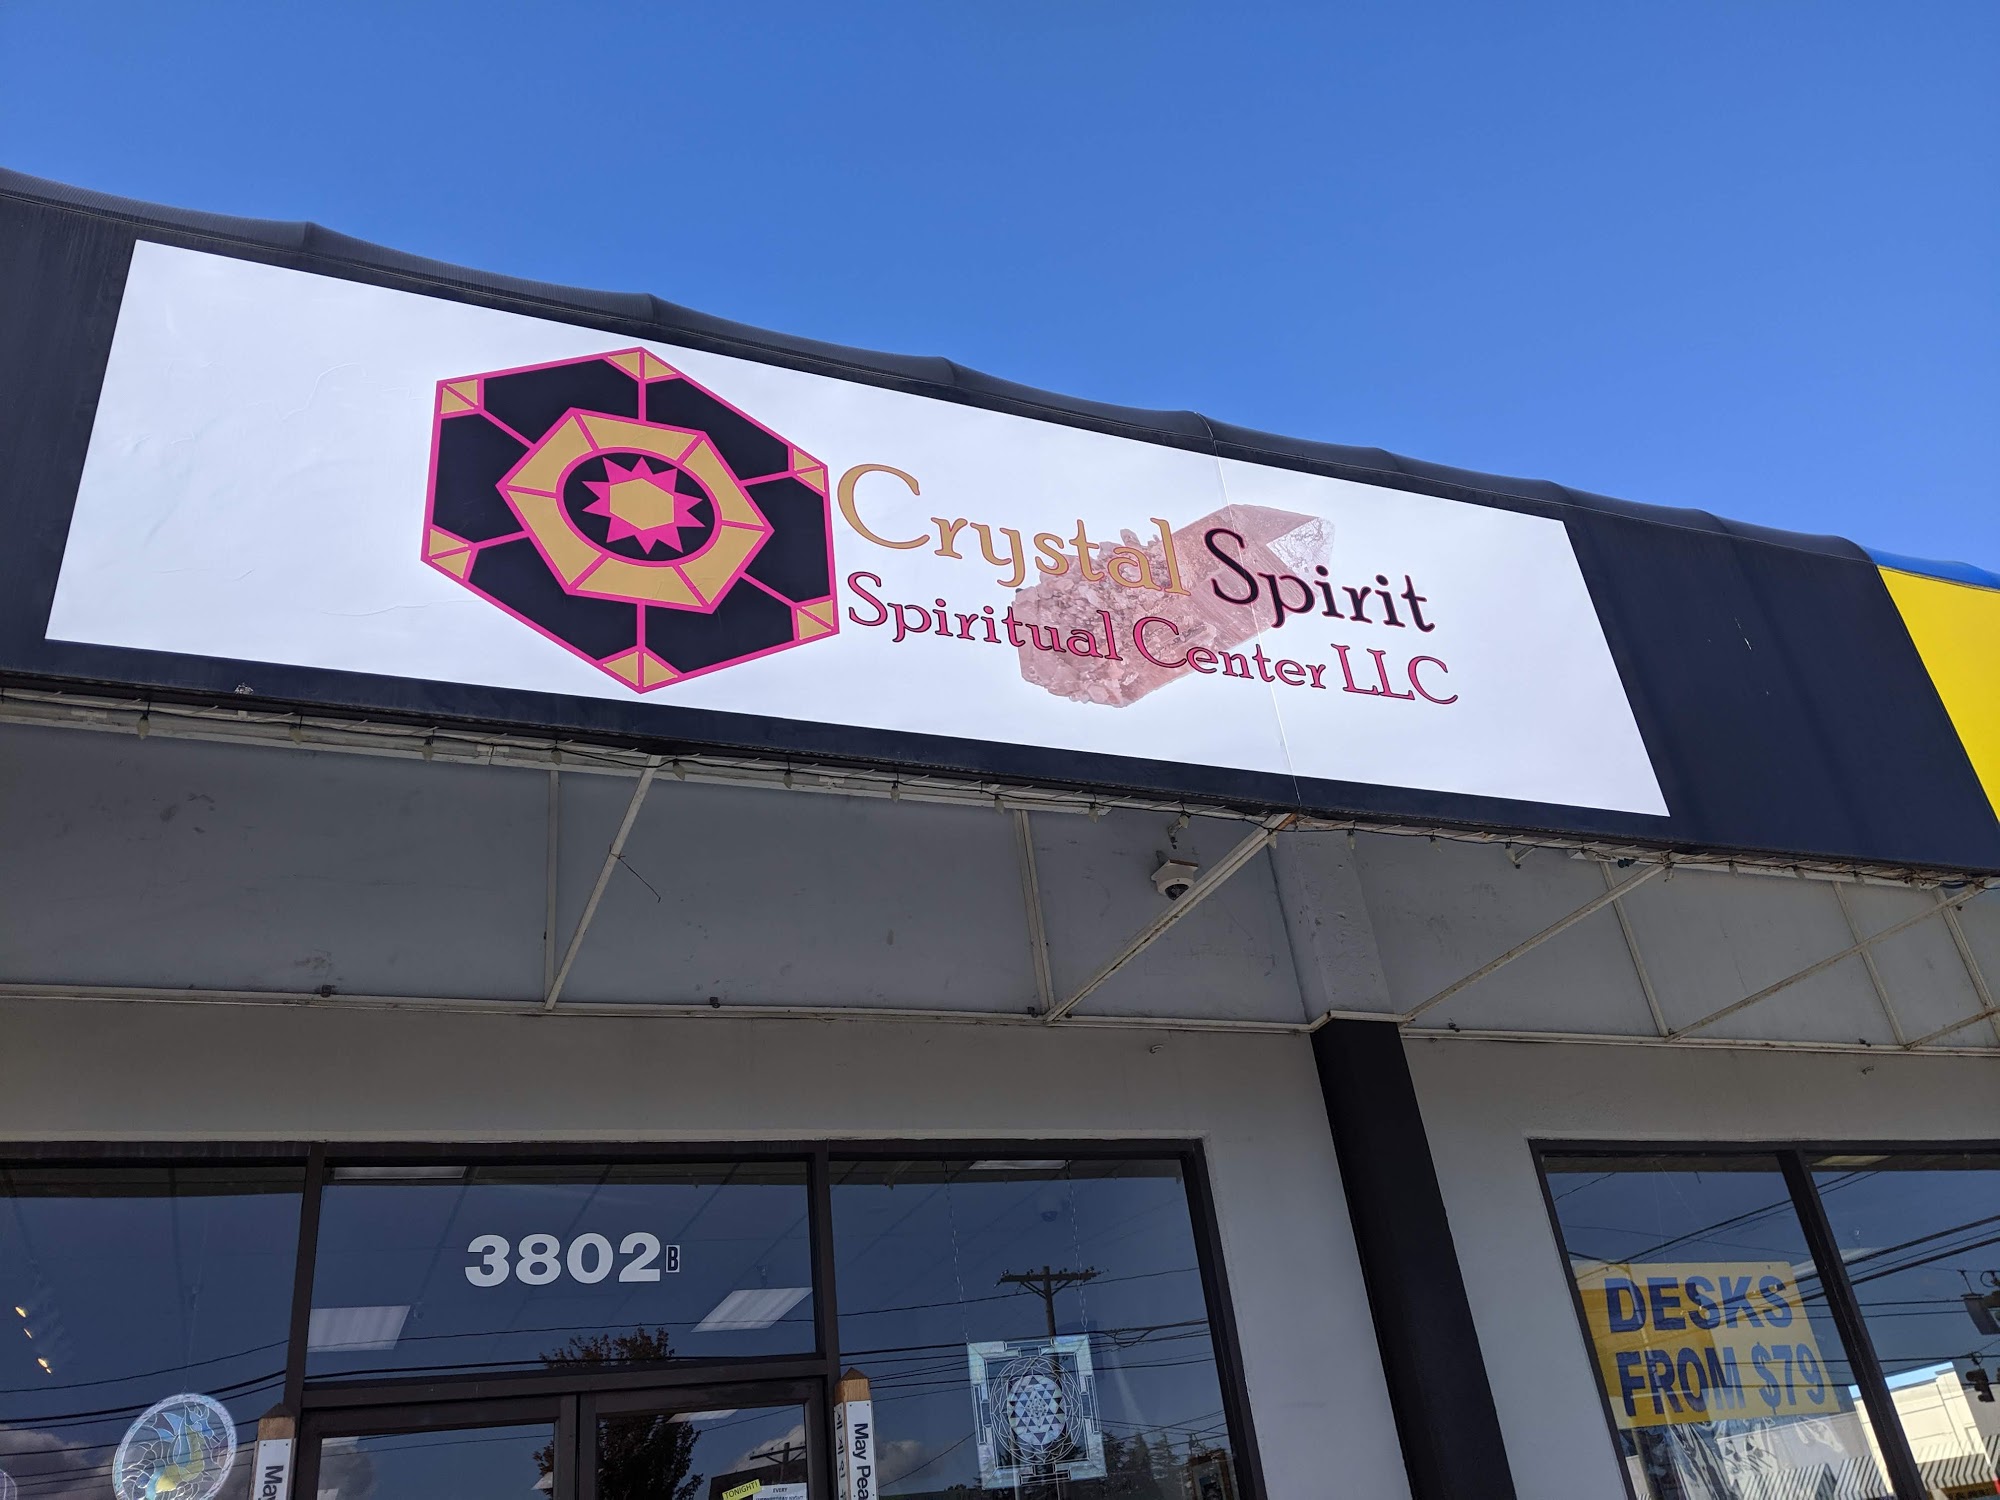 Crystal Spirit Spiritual Center LLC